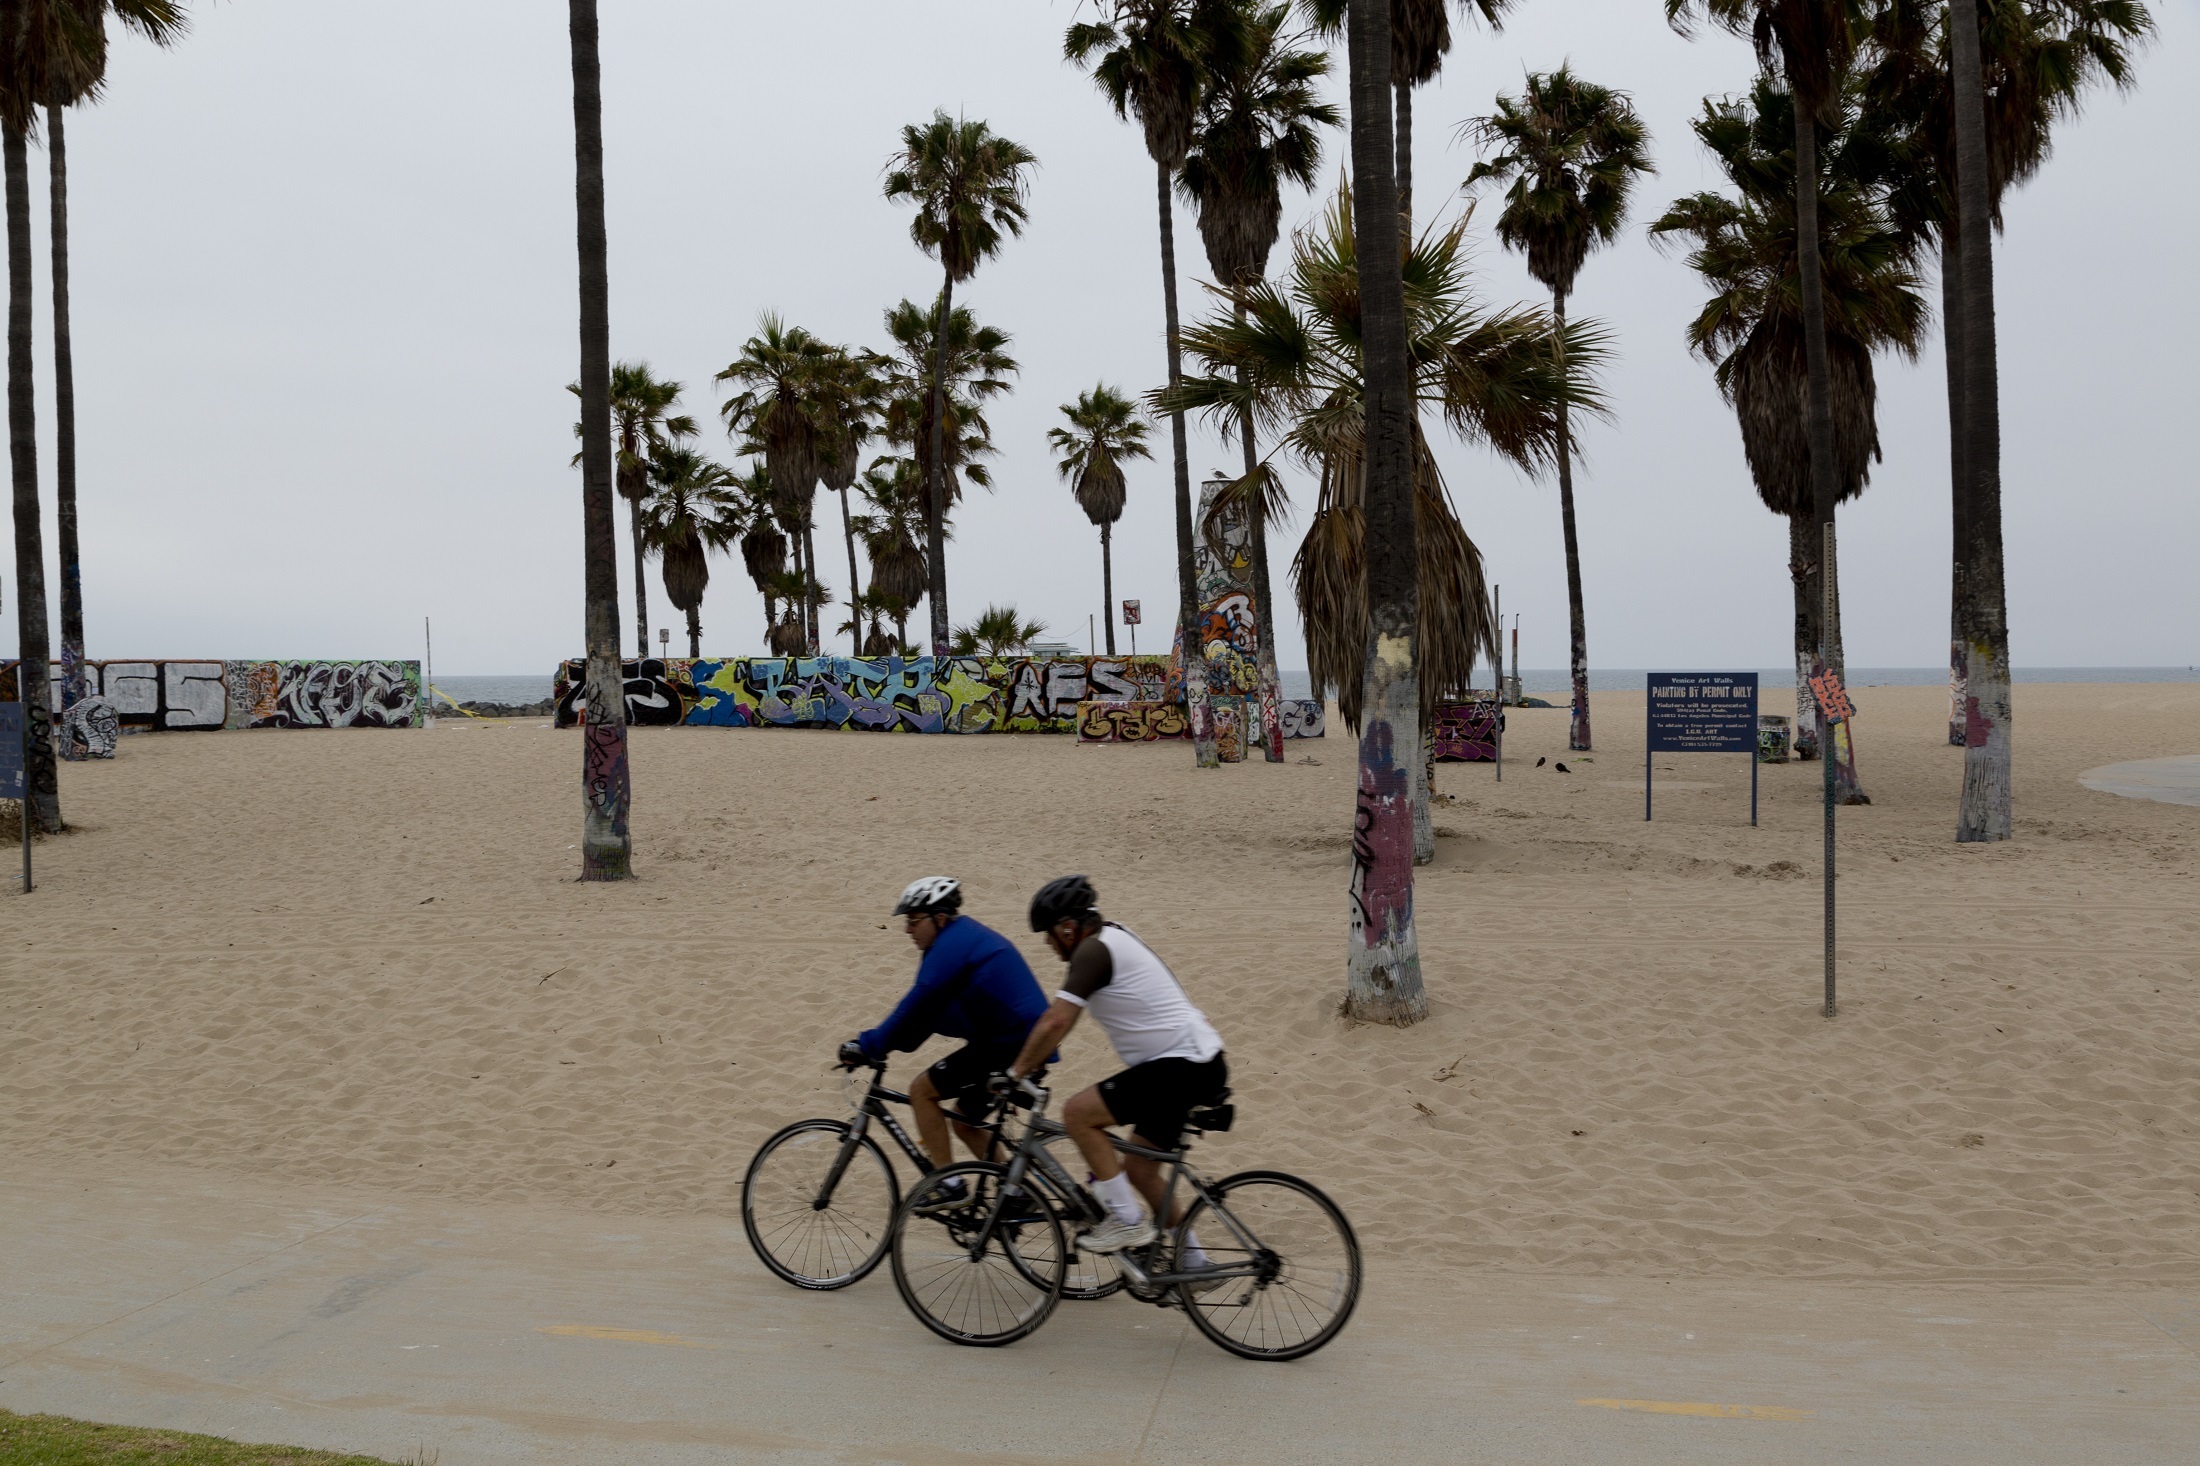 Biking on the beach photo